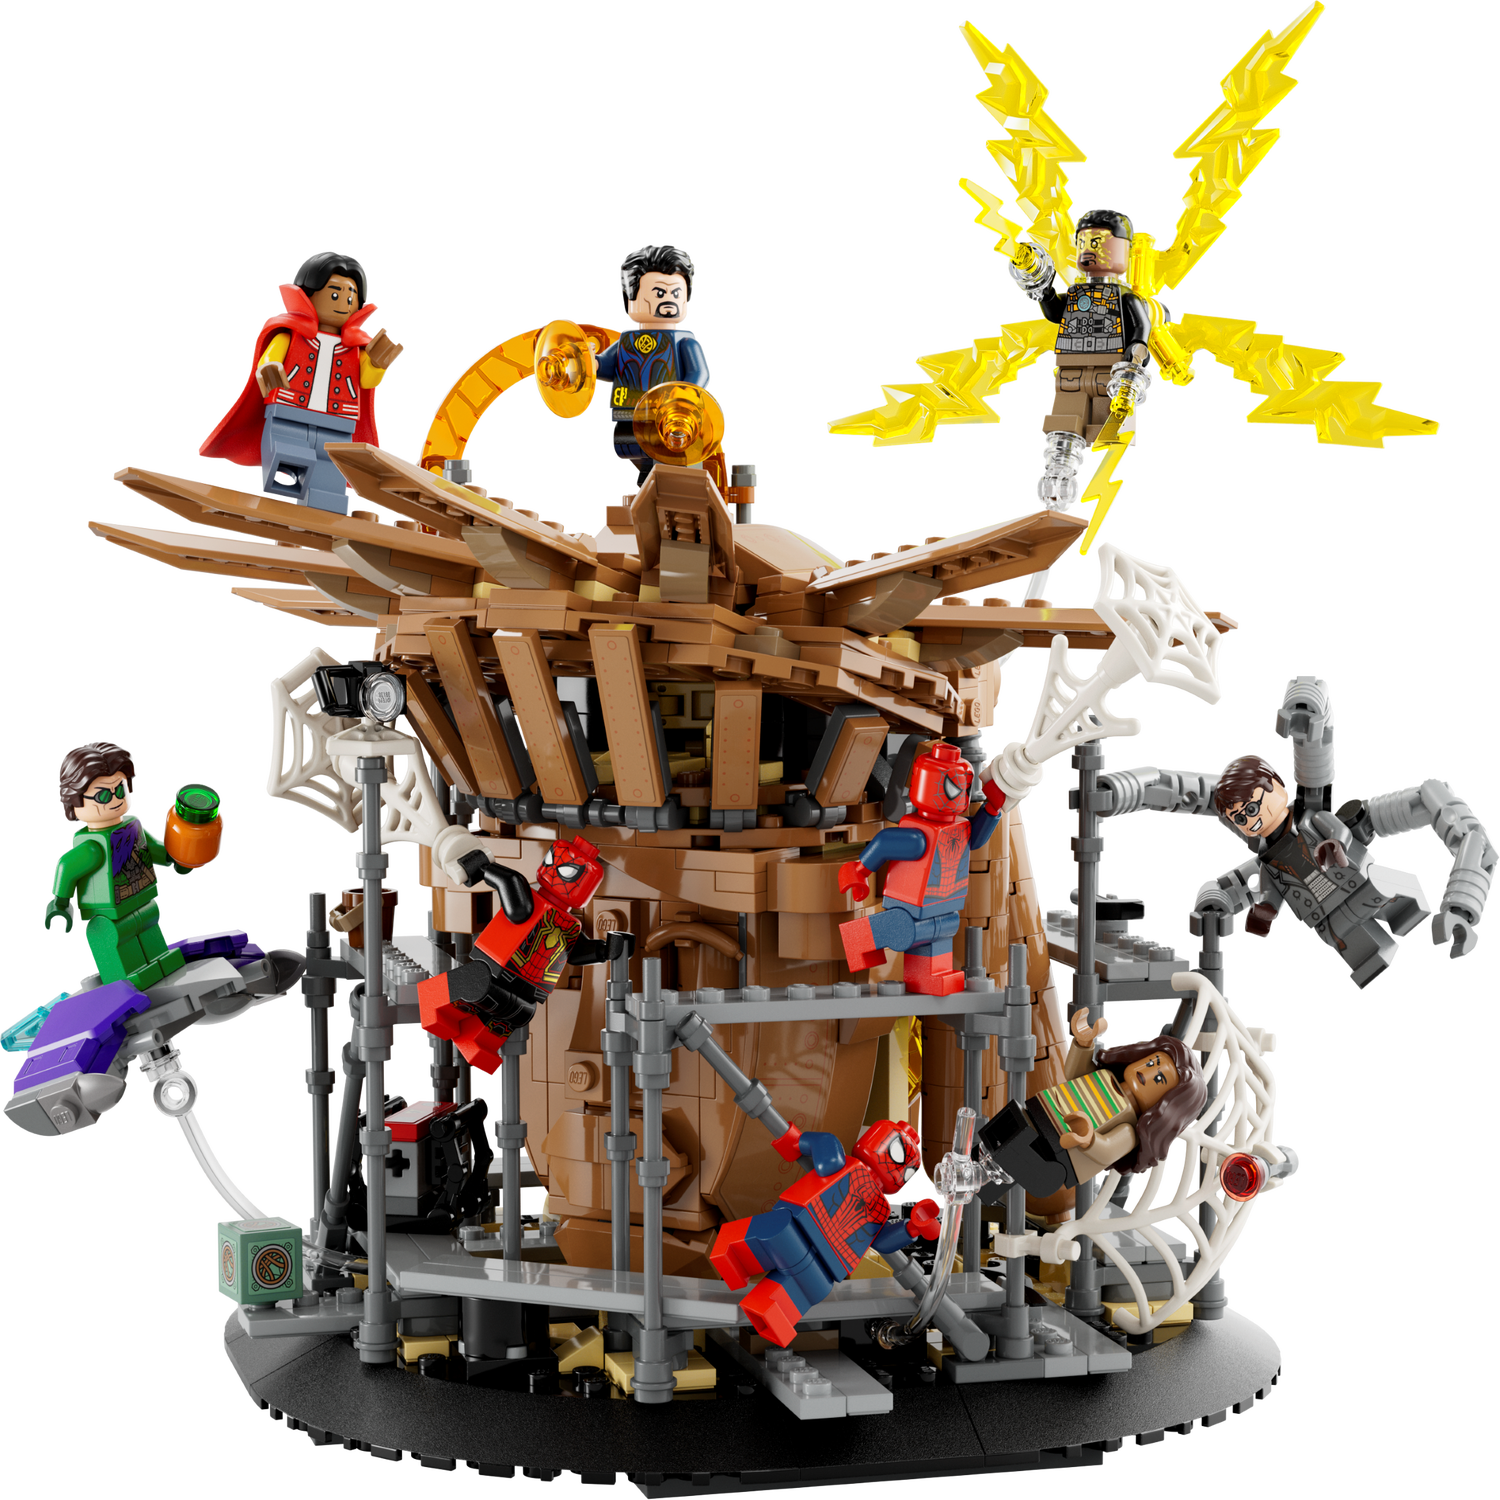 LEGO Marvel Spidey et ses incroyables amis Belgium